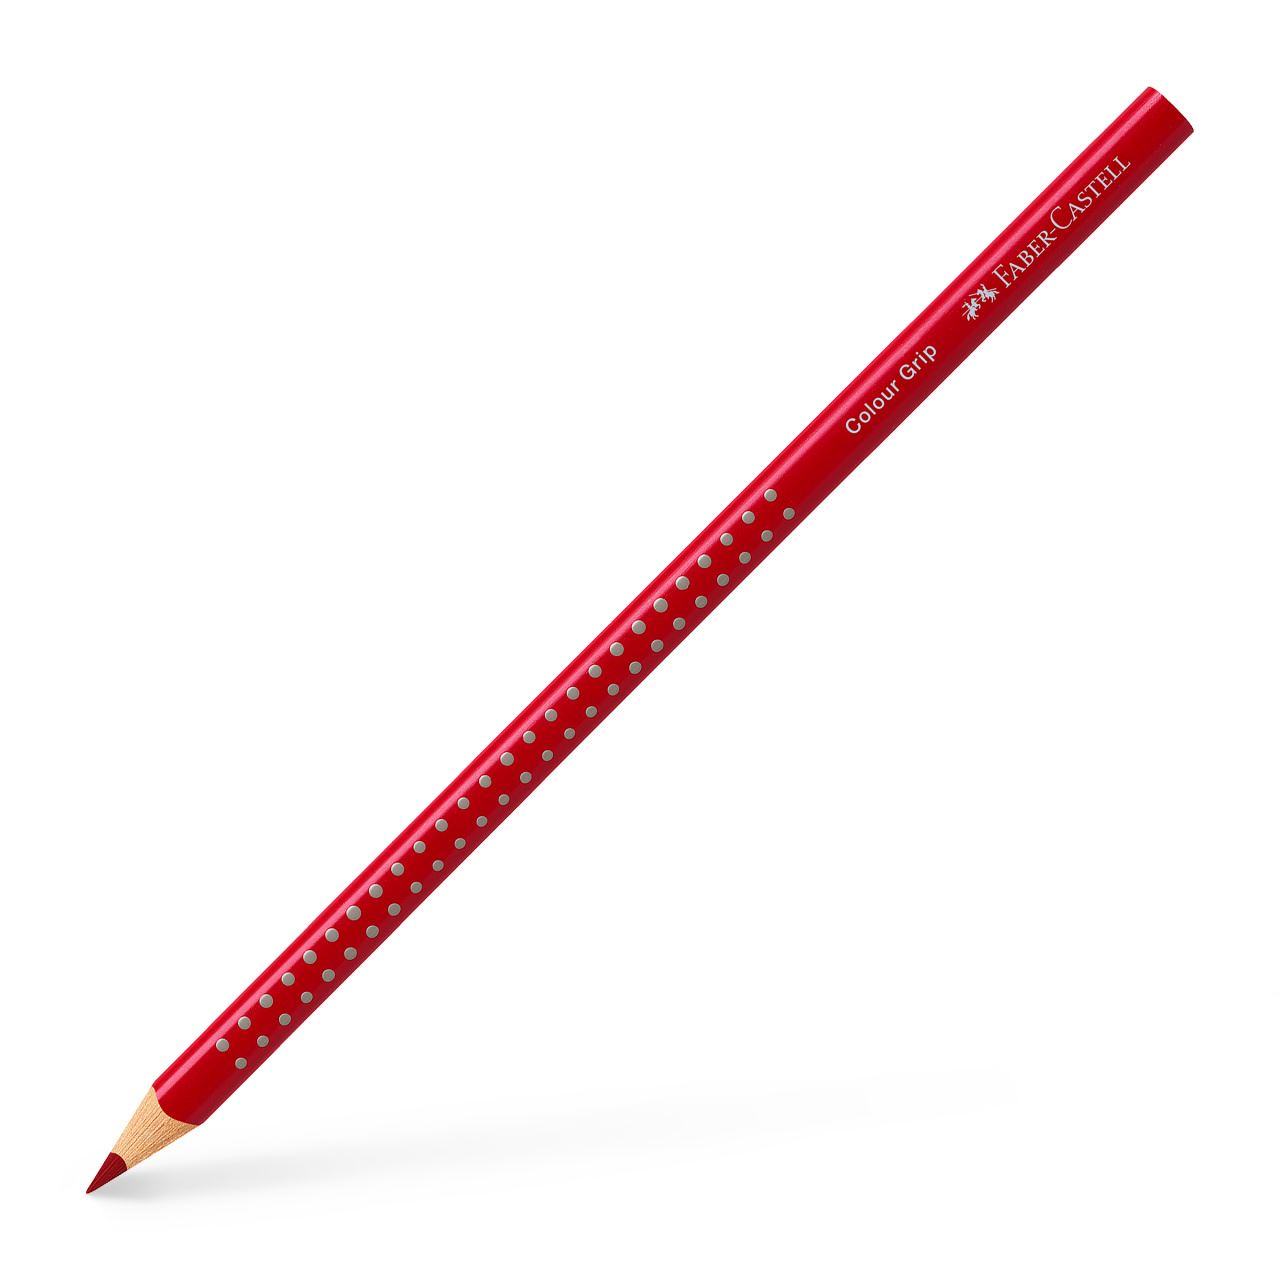 Faber-Castell - Colour Grip colour pencil, alizarin crimson